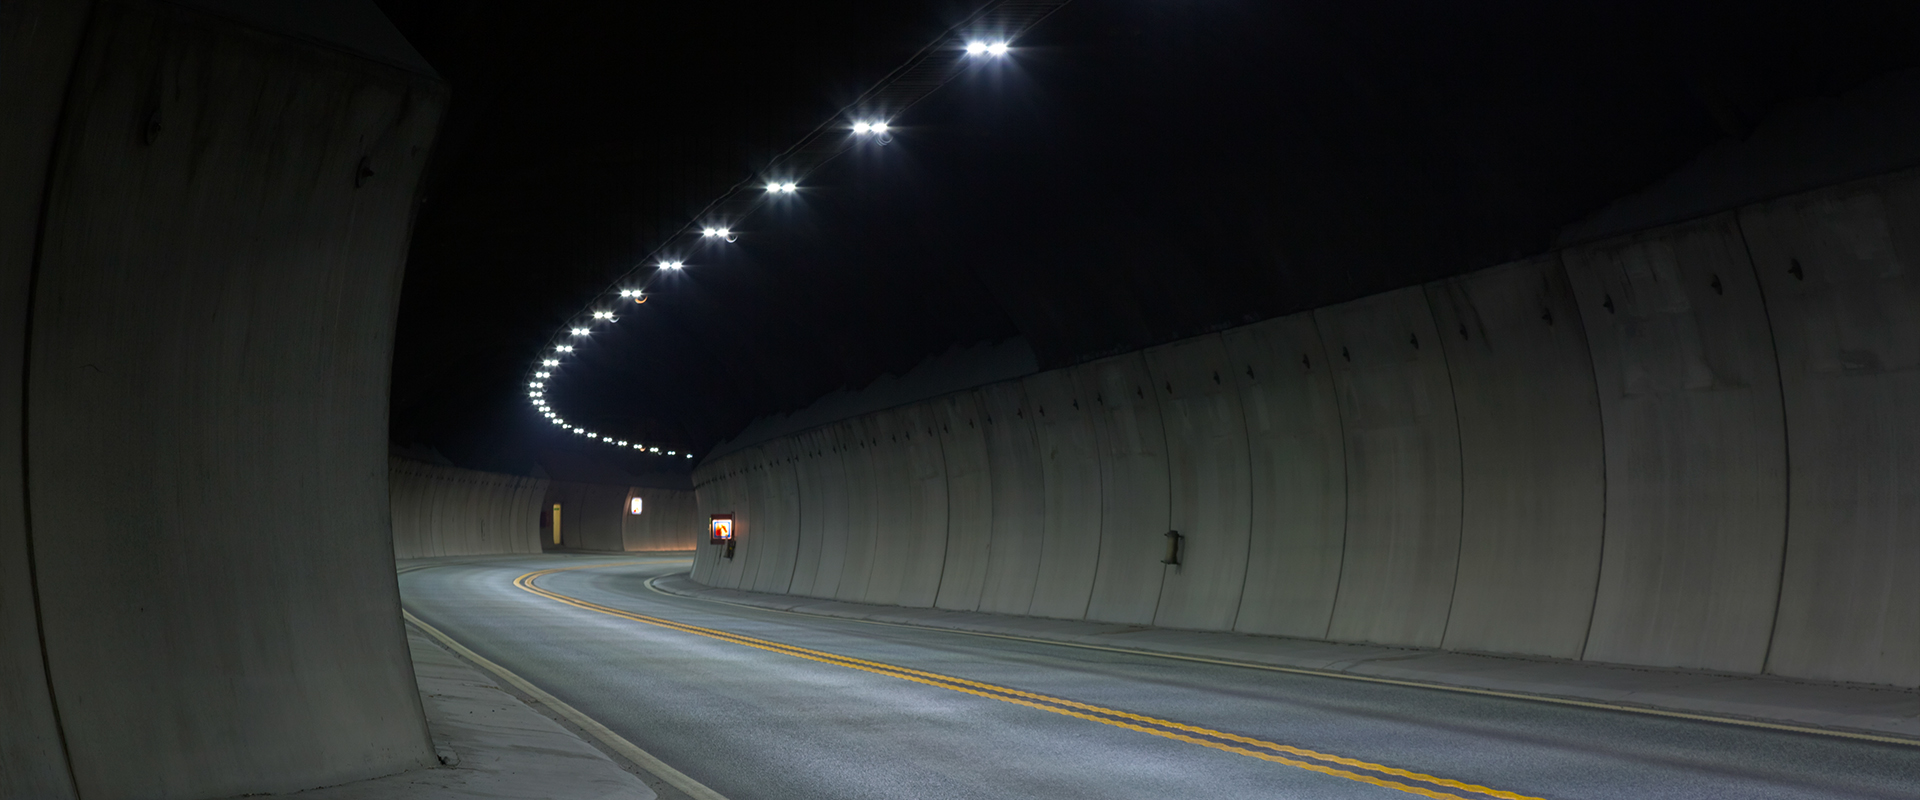 road tunnel lighting